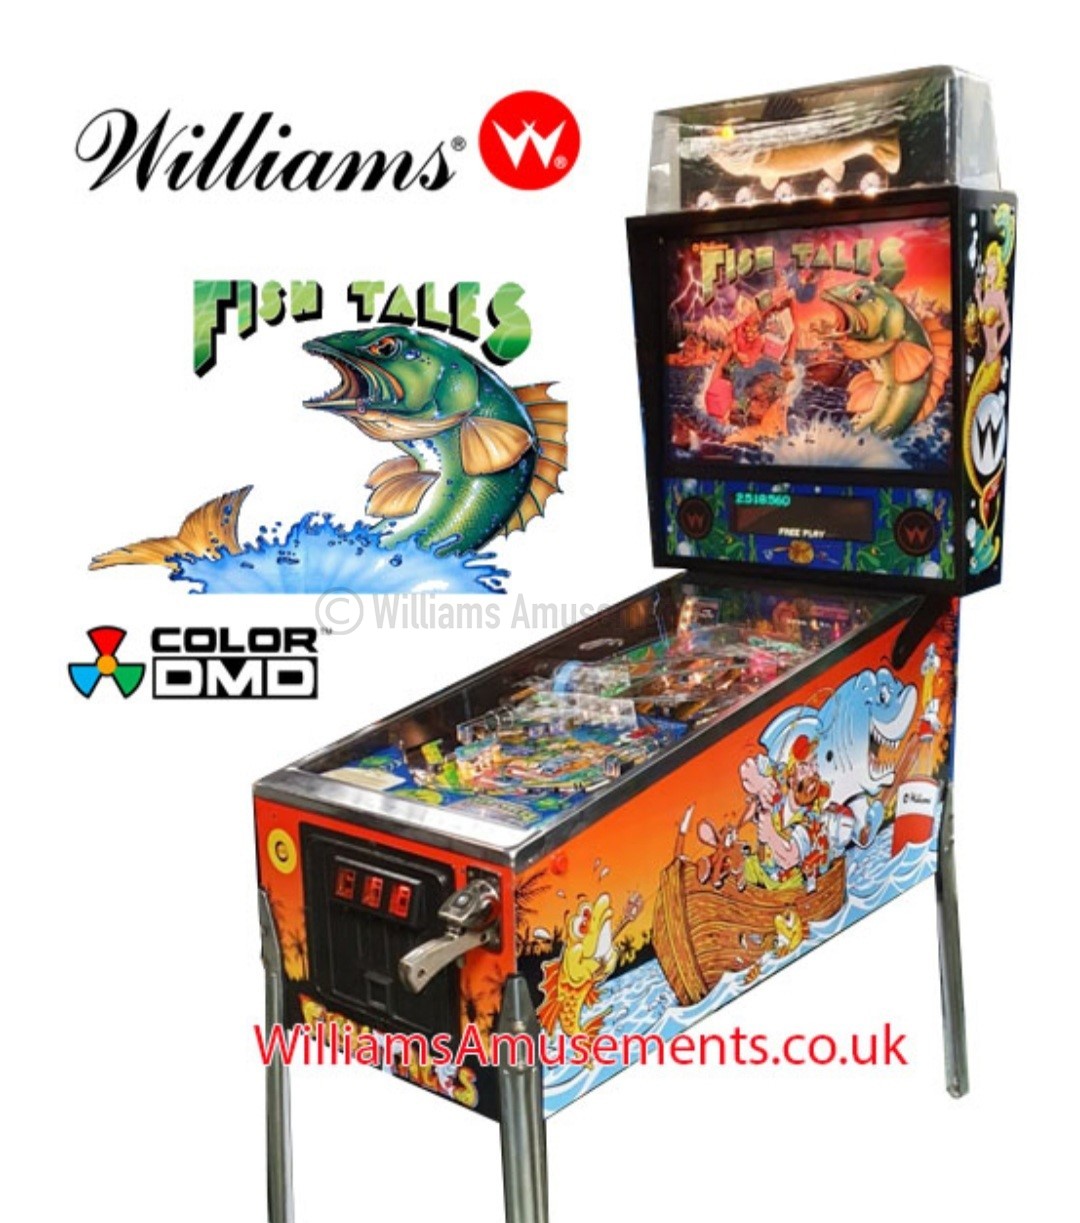 Williams Amusements